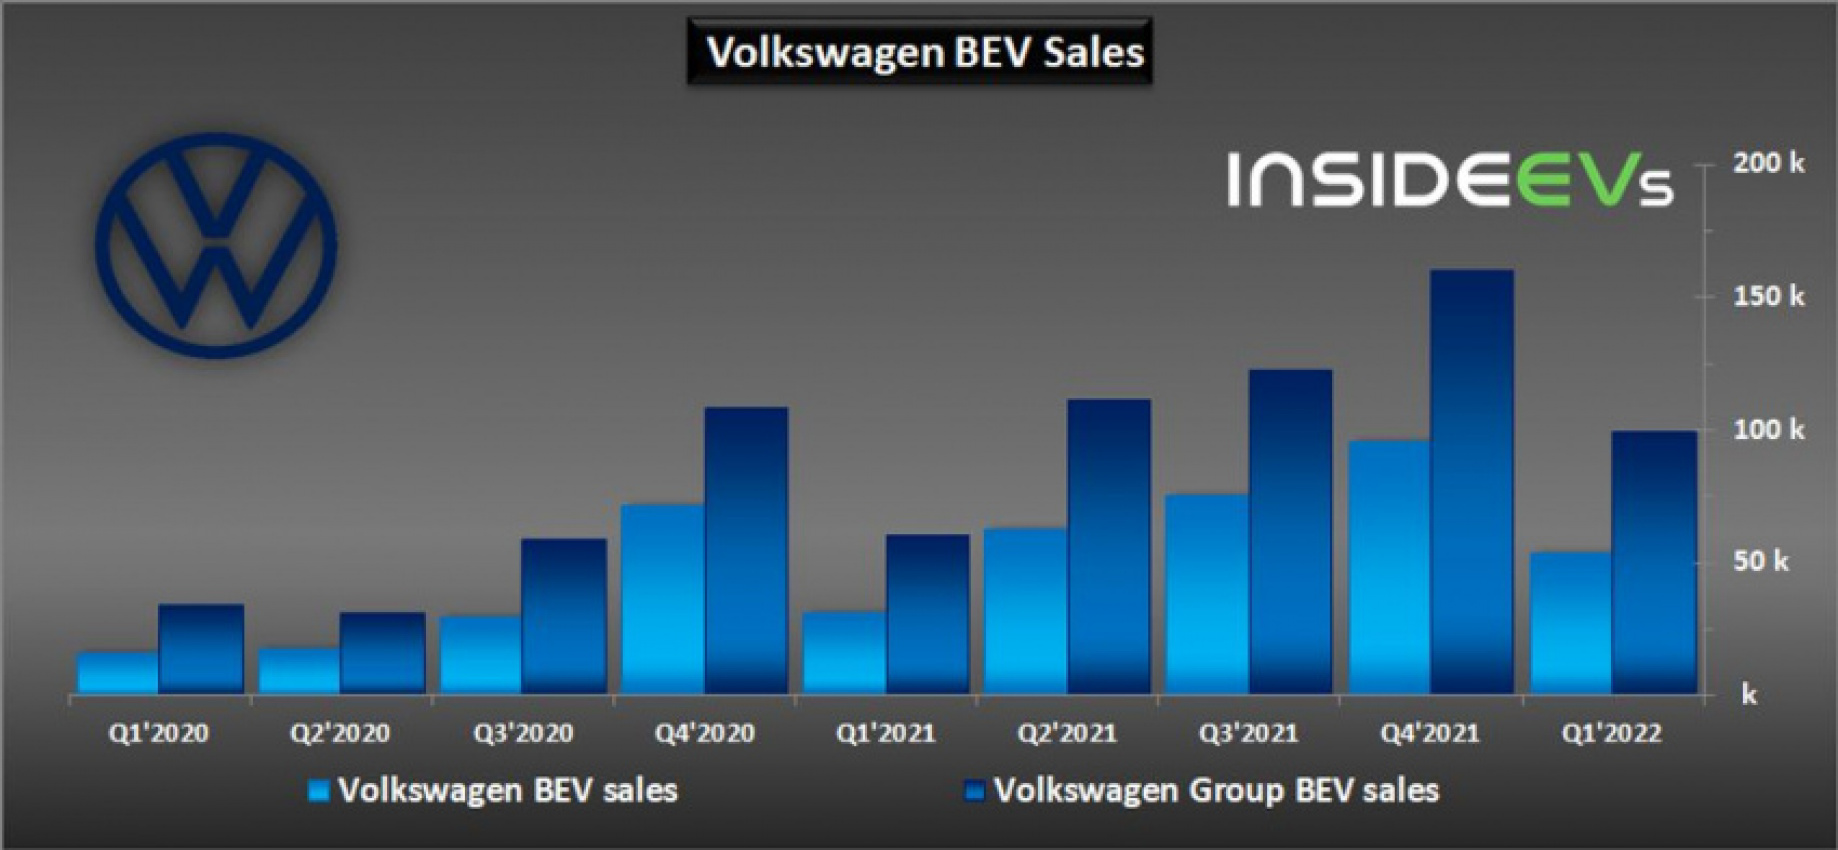 Volkswagen Group Global BEV Sales In Q1 2022 Almost 100,000 TopCarNews